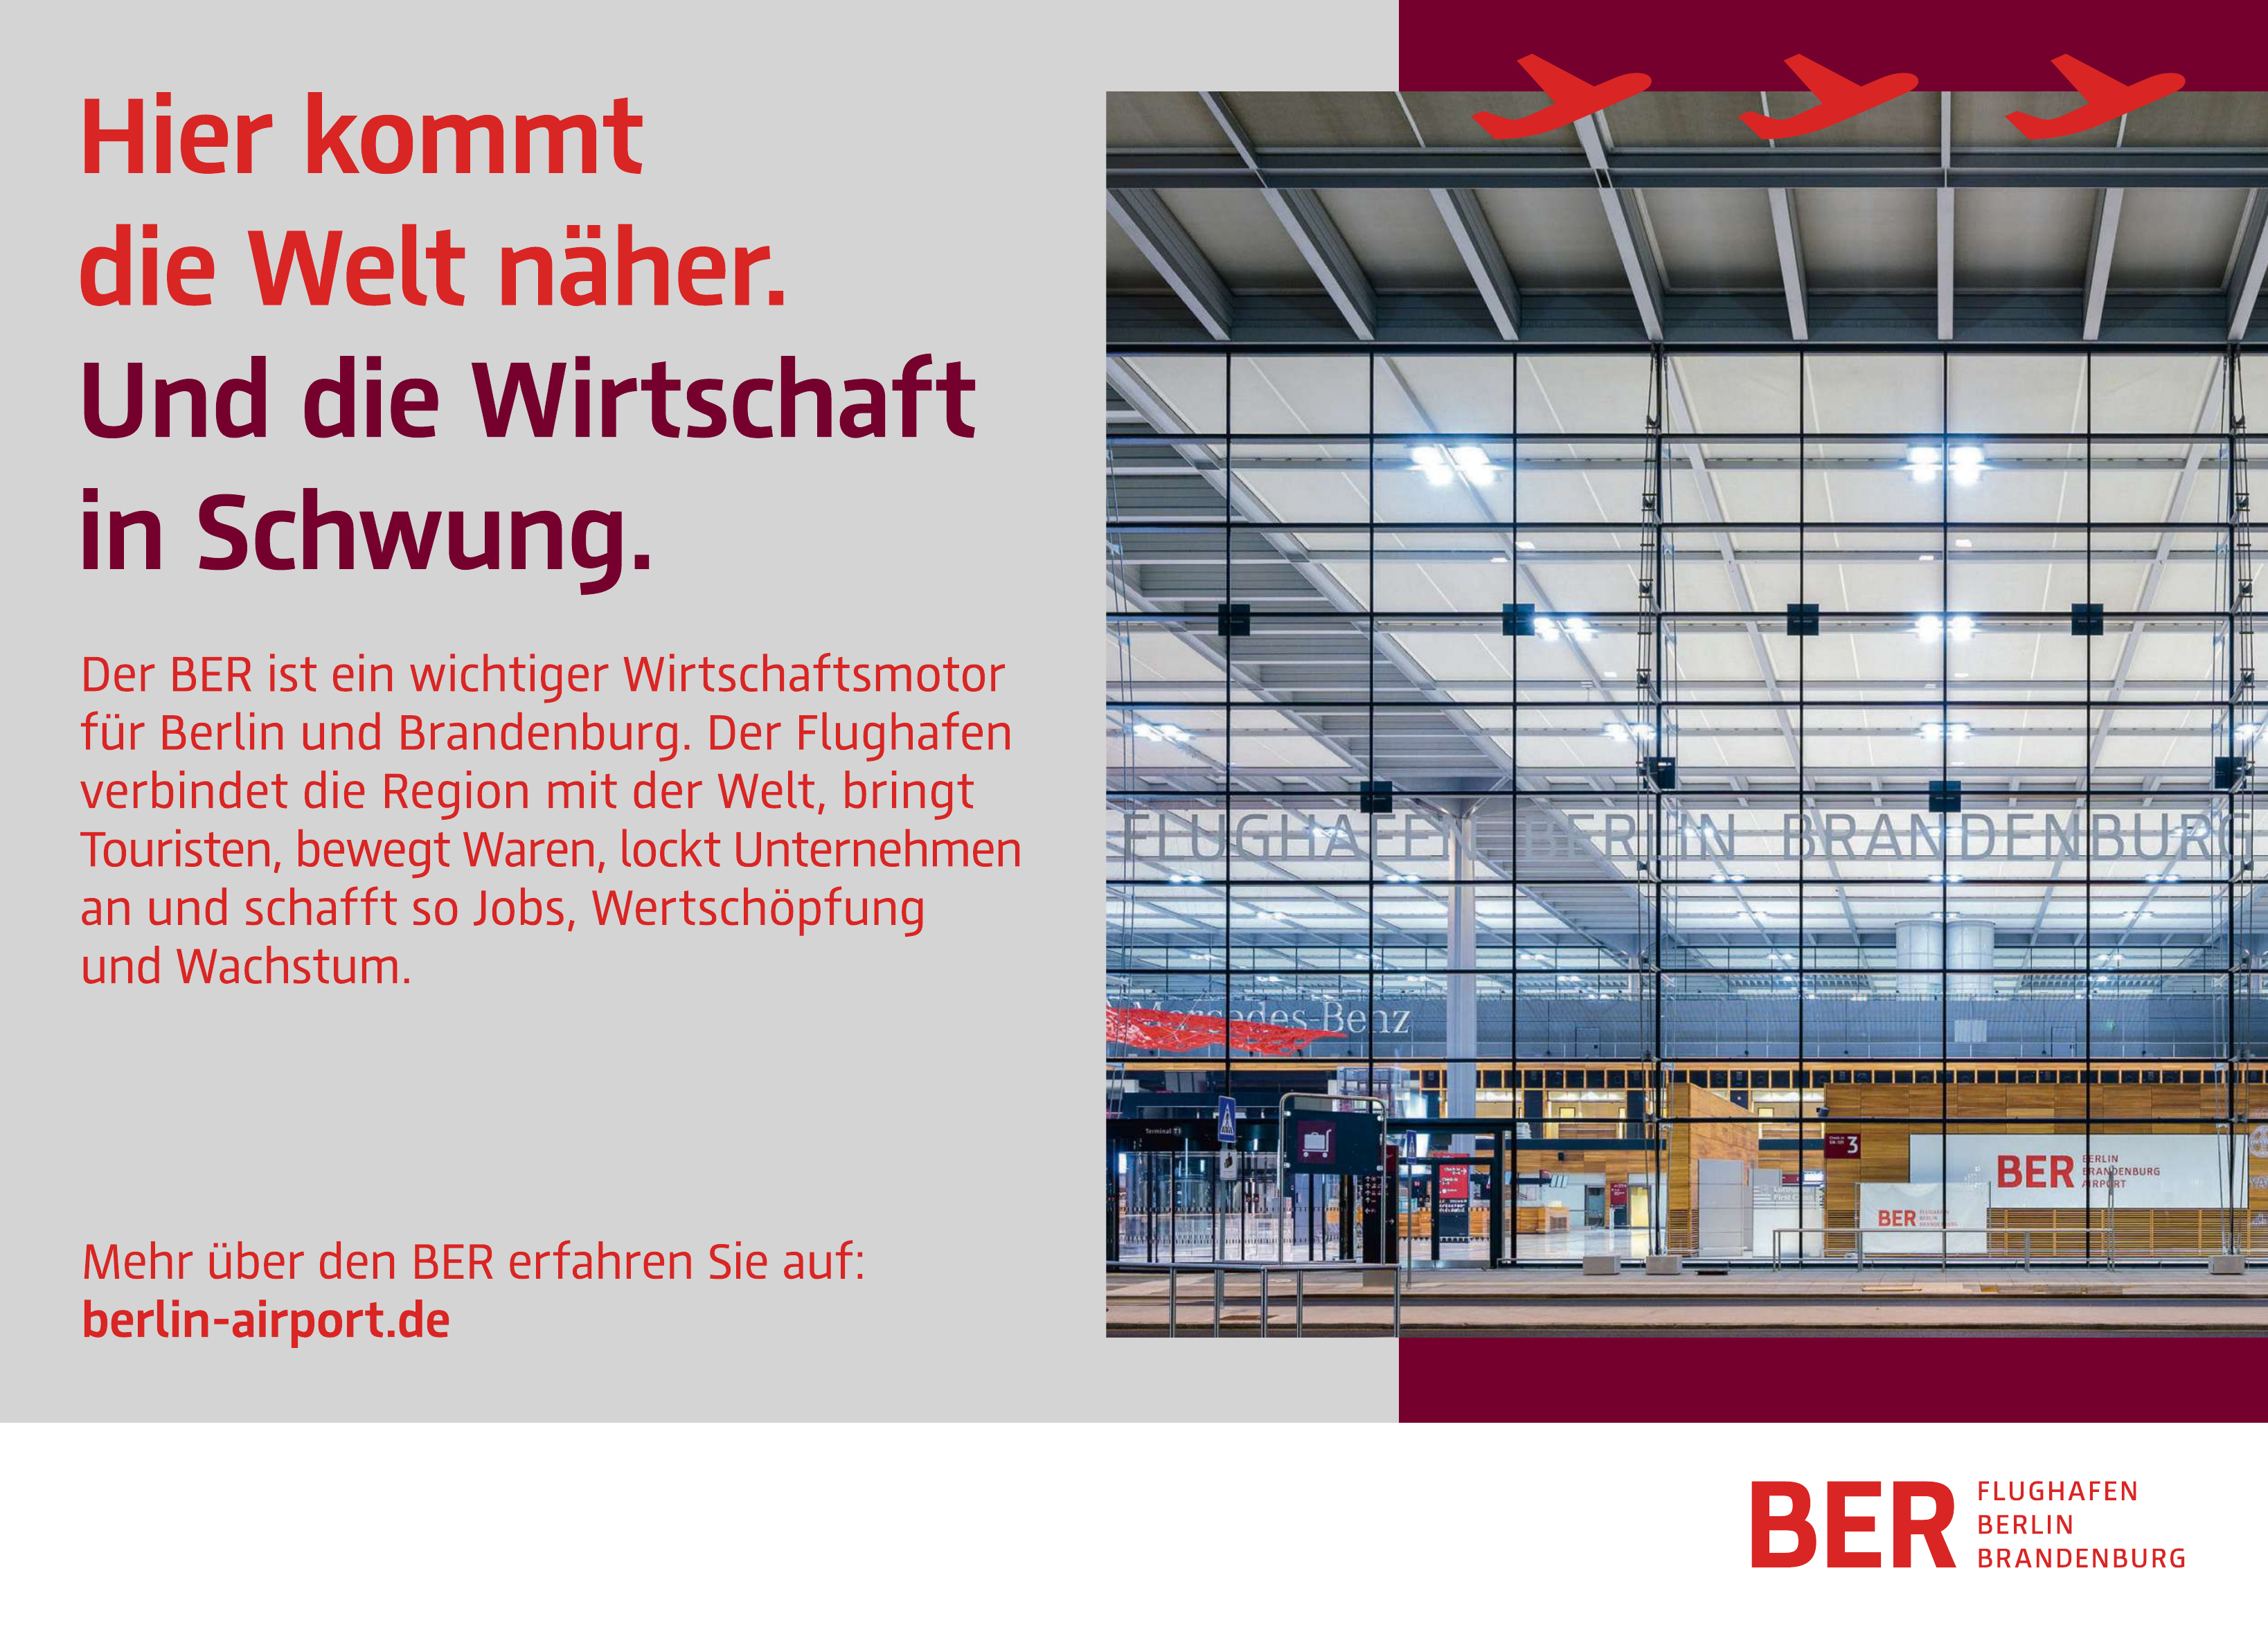 BER Flughafen Berlin Brandenburg